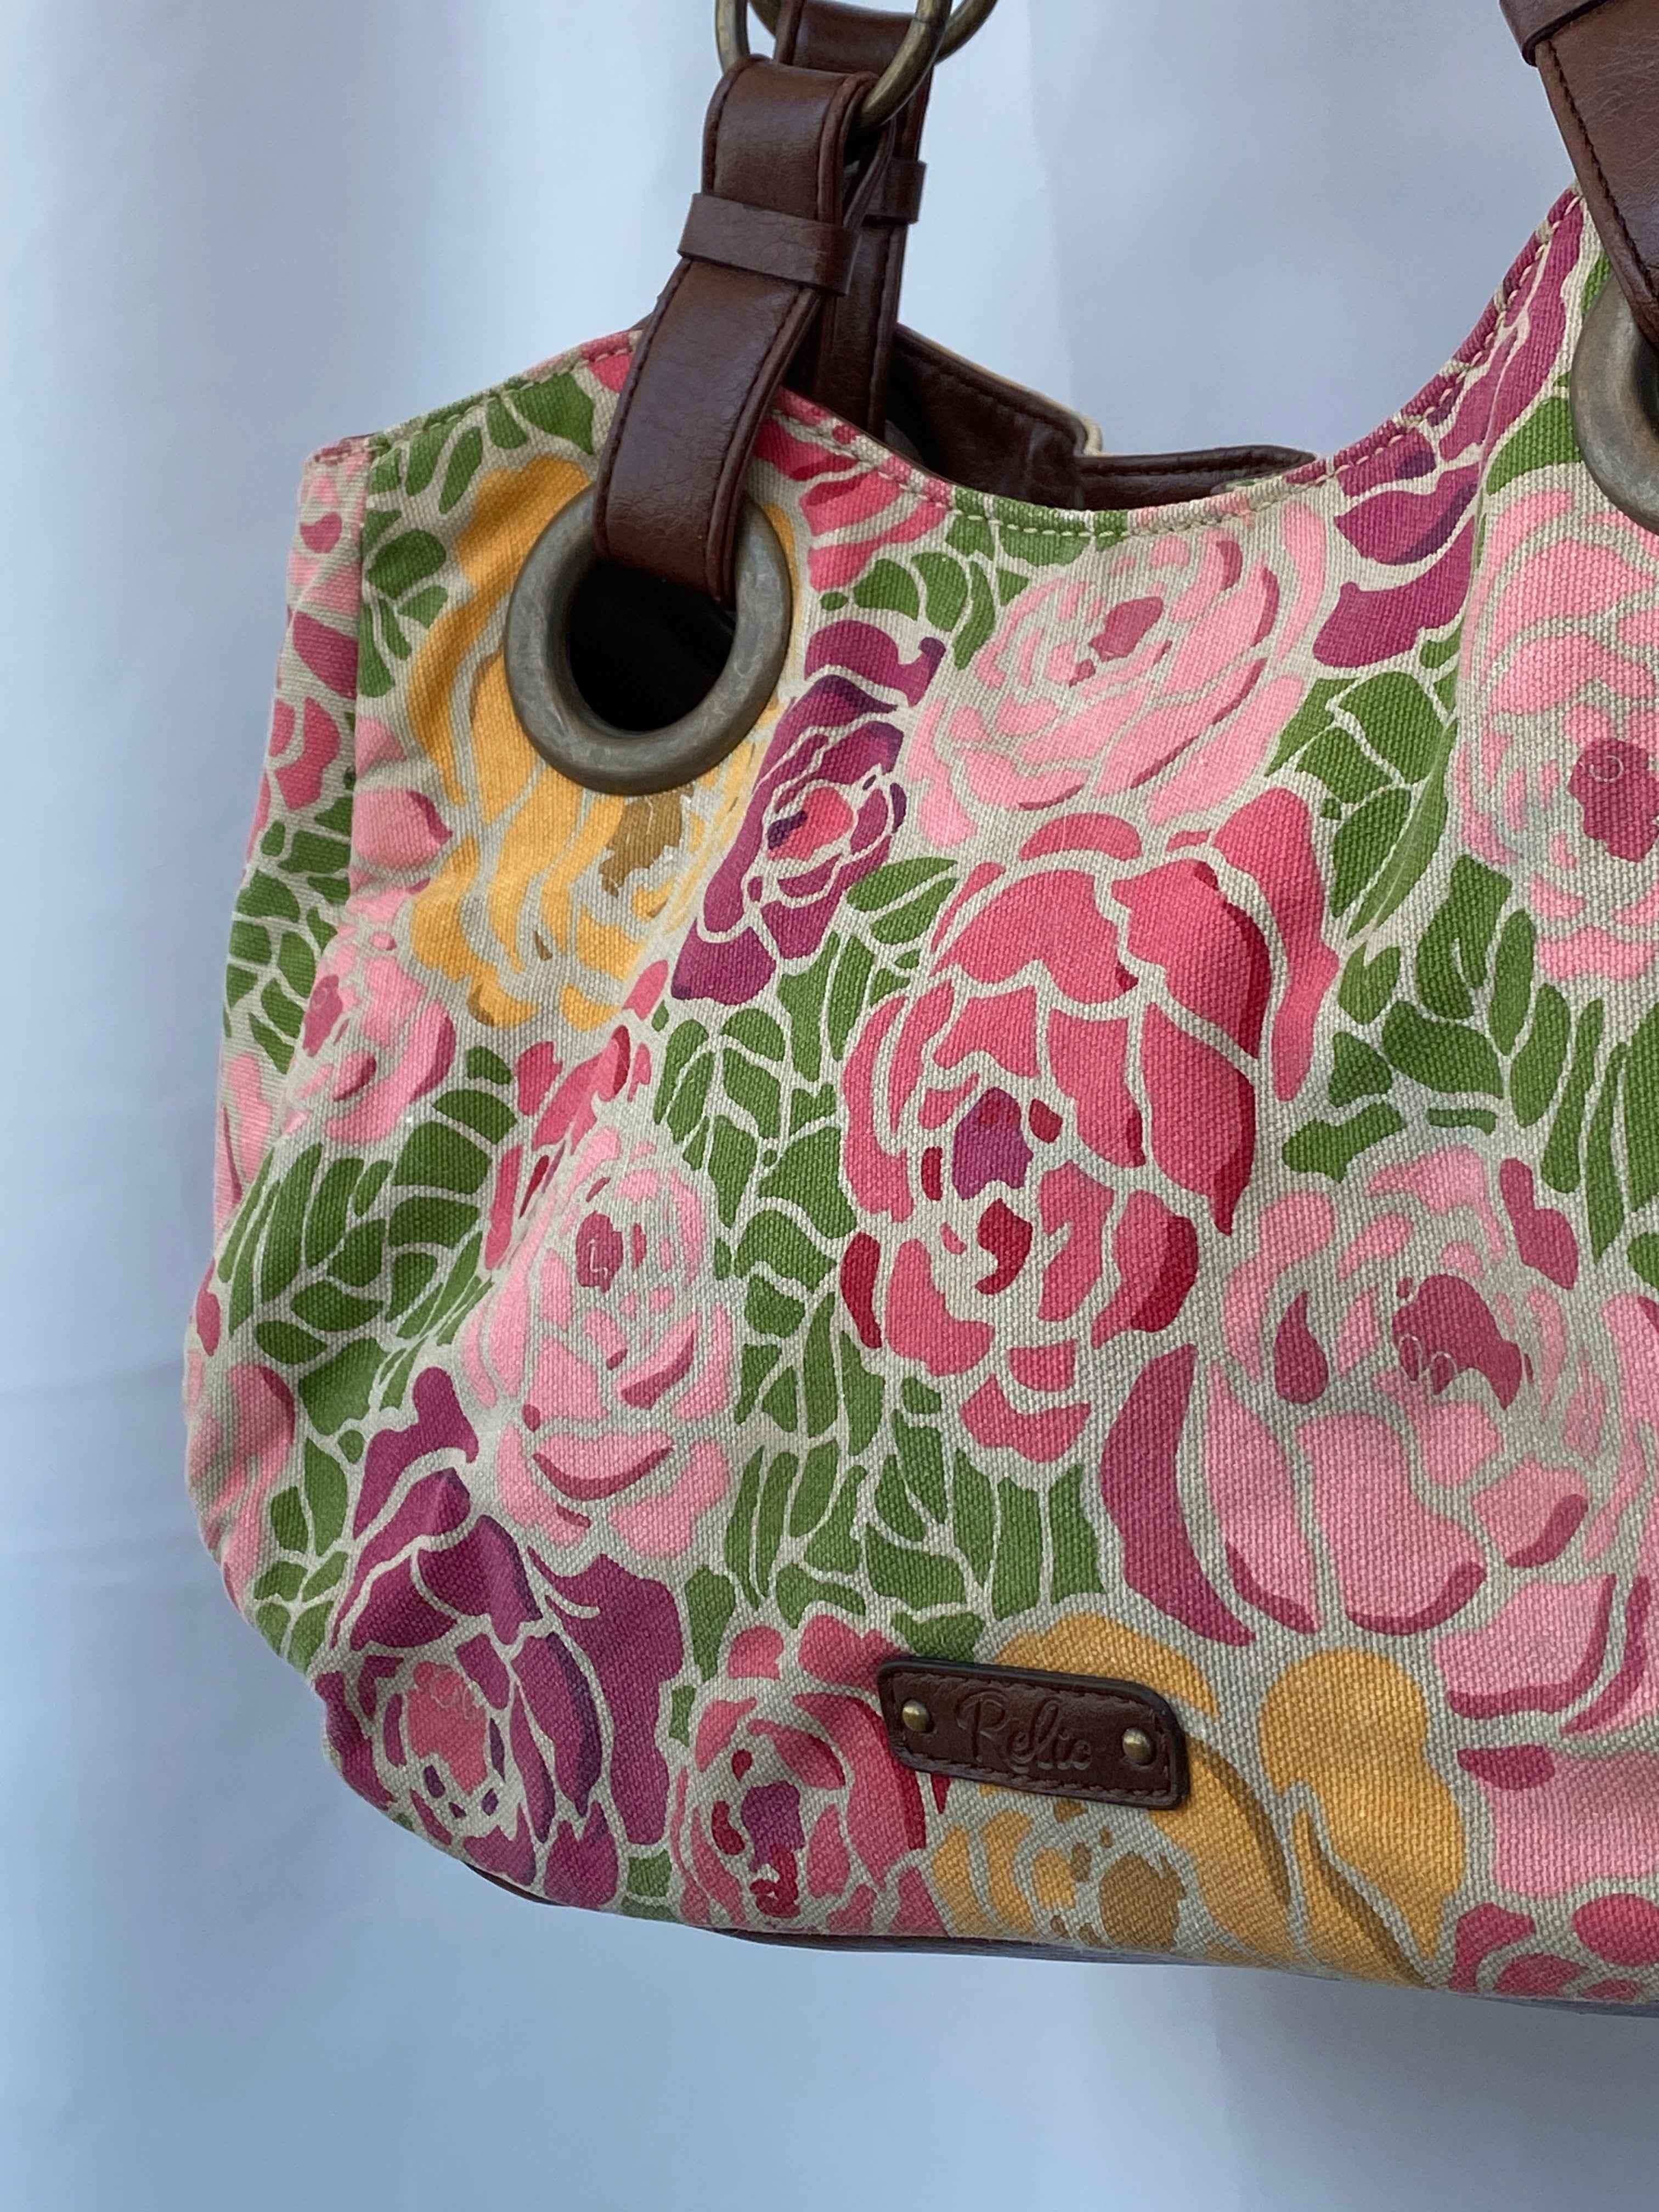 Vintage Relic Floral Shoulder Bag - Balagan Vintage Shoulder Bag 90s, shoulder bag